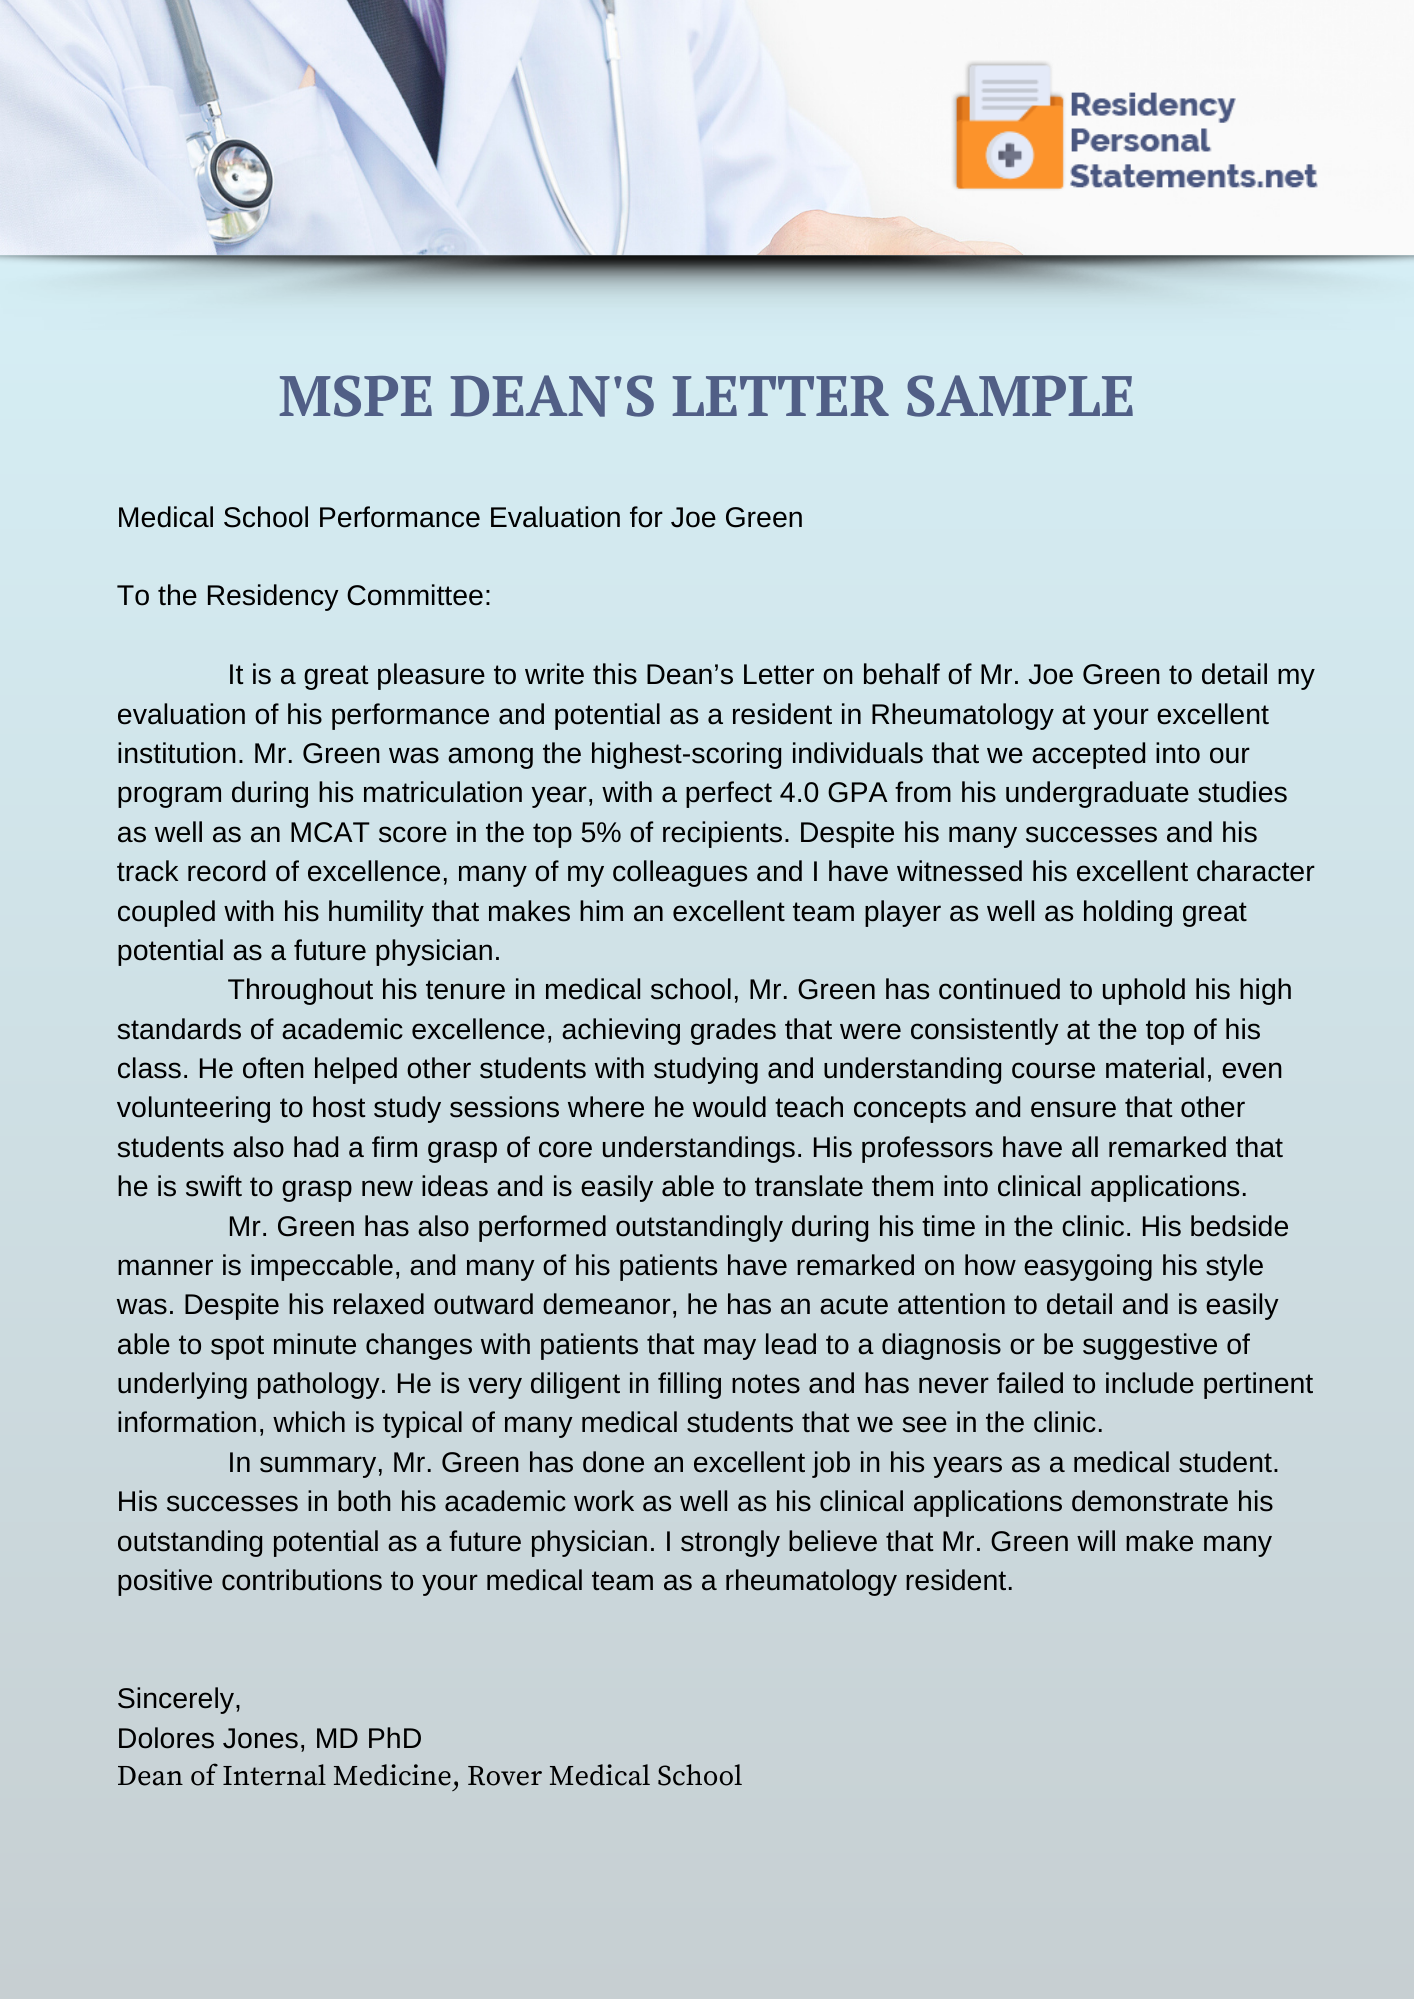 mspe dean's letter sample